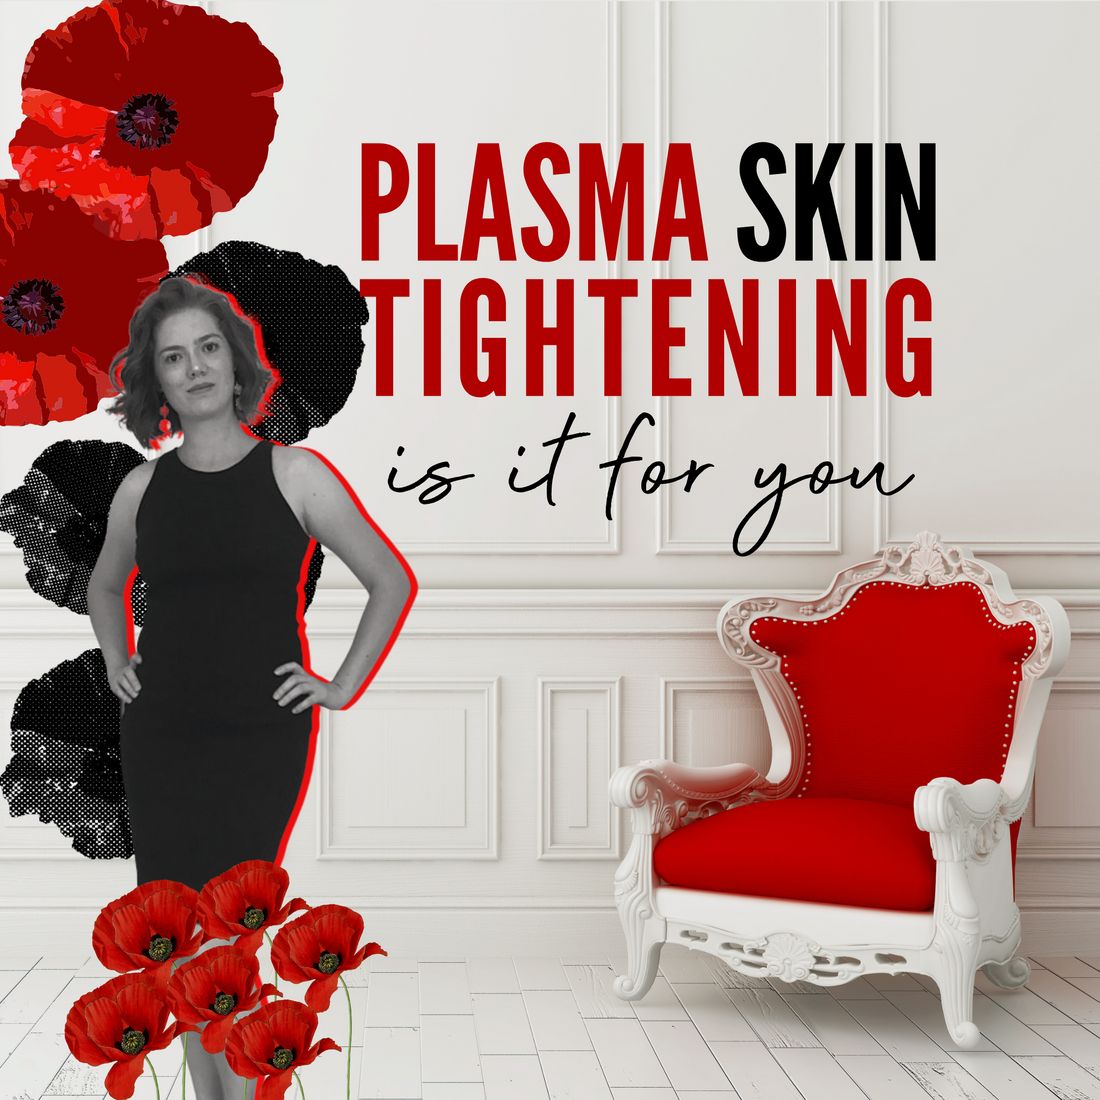 Plasma skin tightening | Anti aging secrets